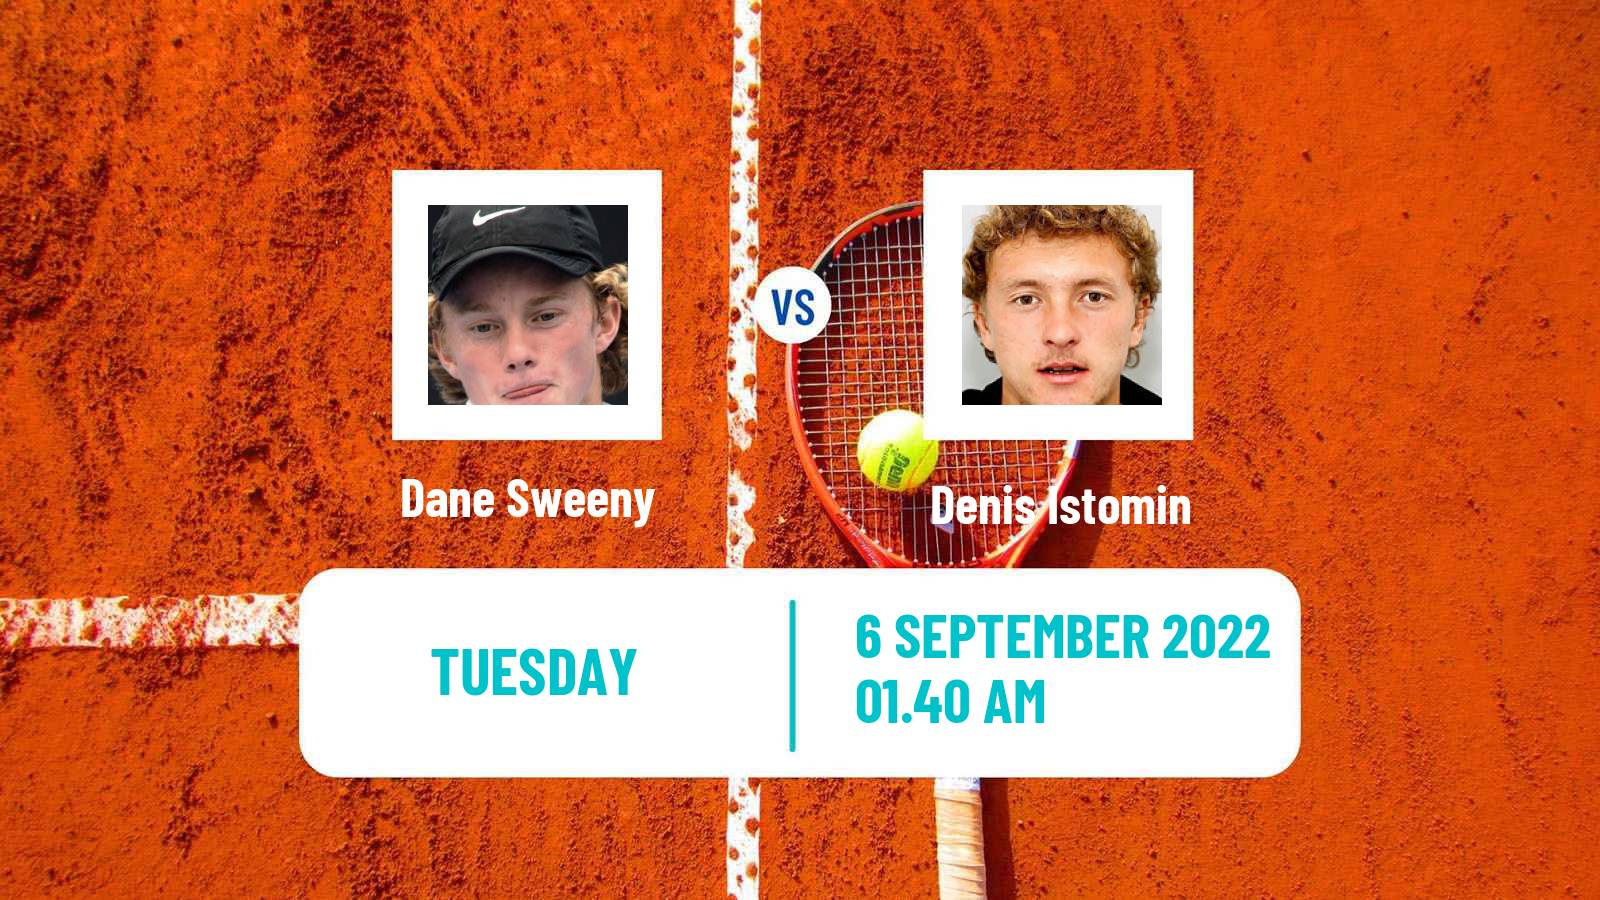 Tennis ATP Challenger Dane Sweeny - Denis Istomin